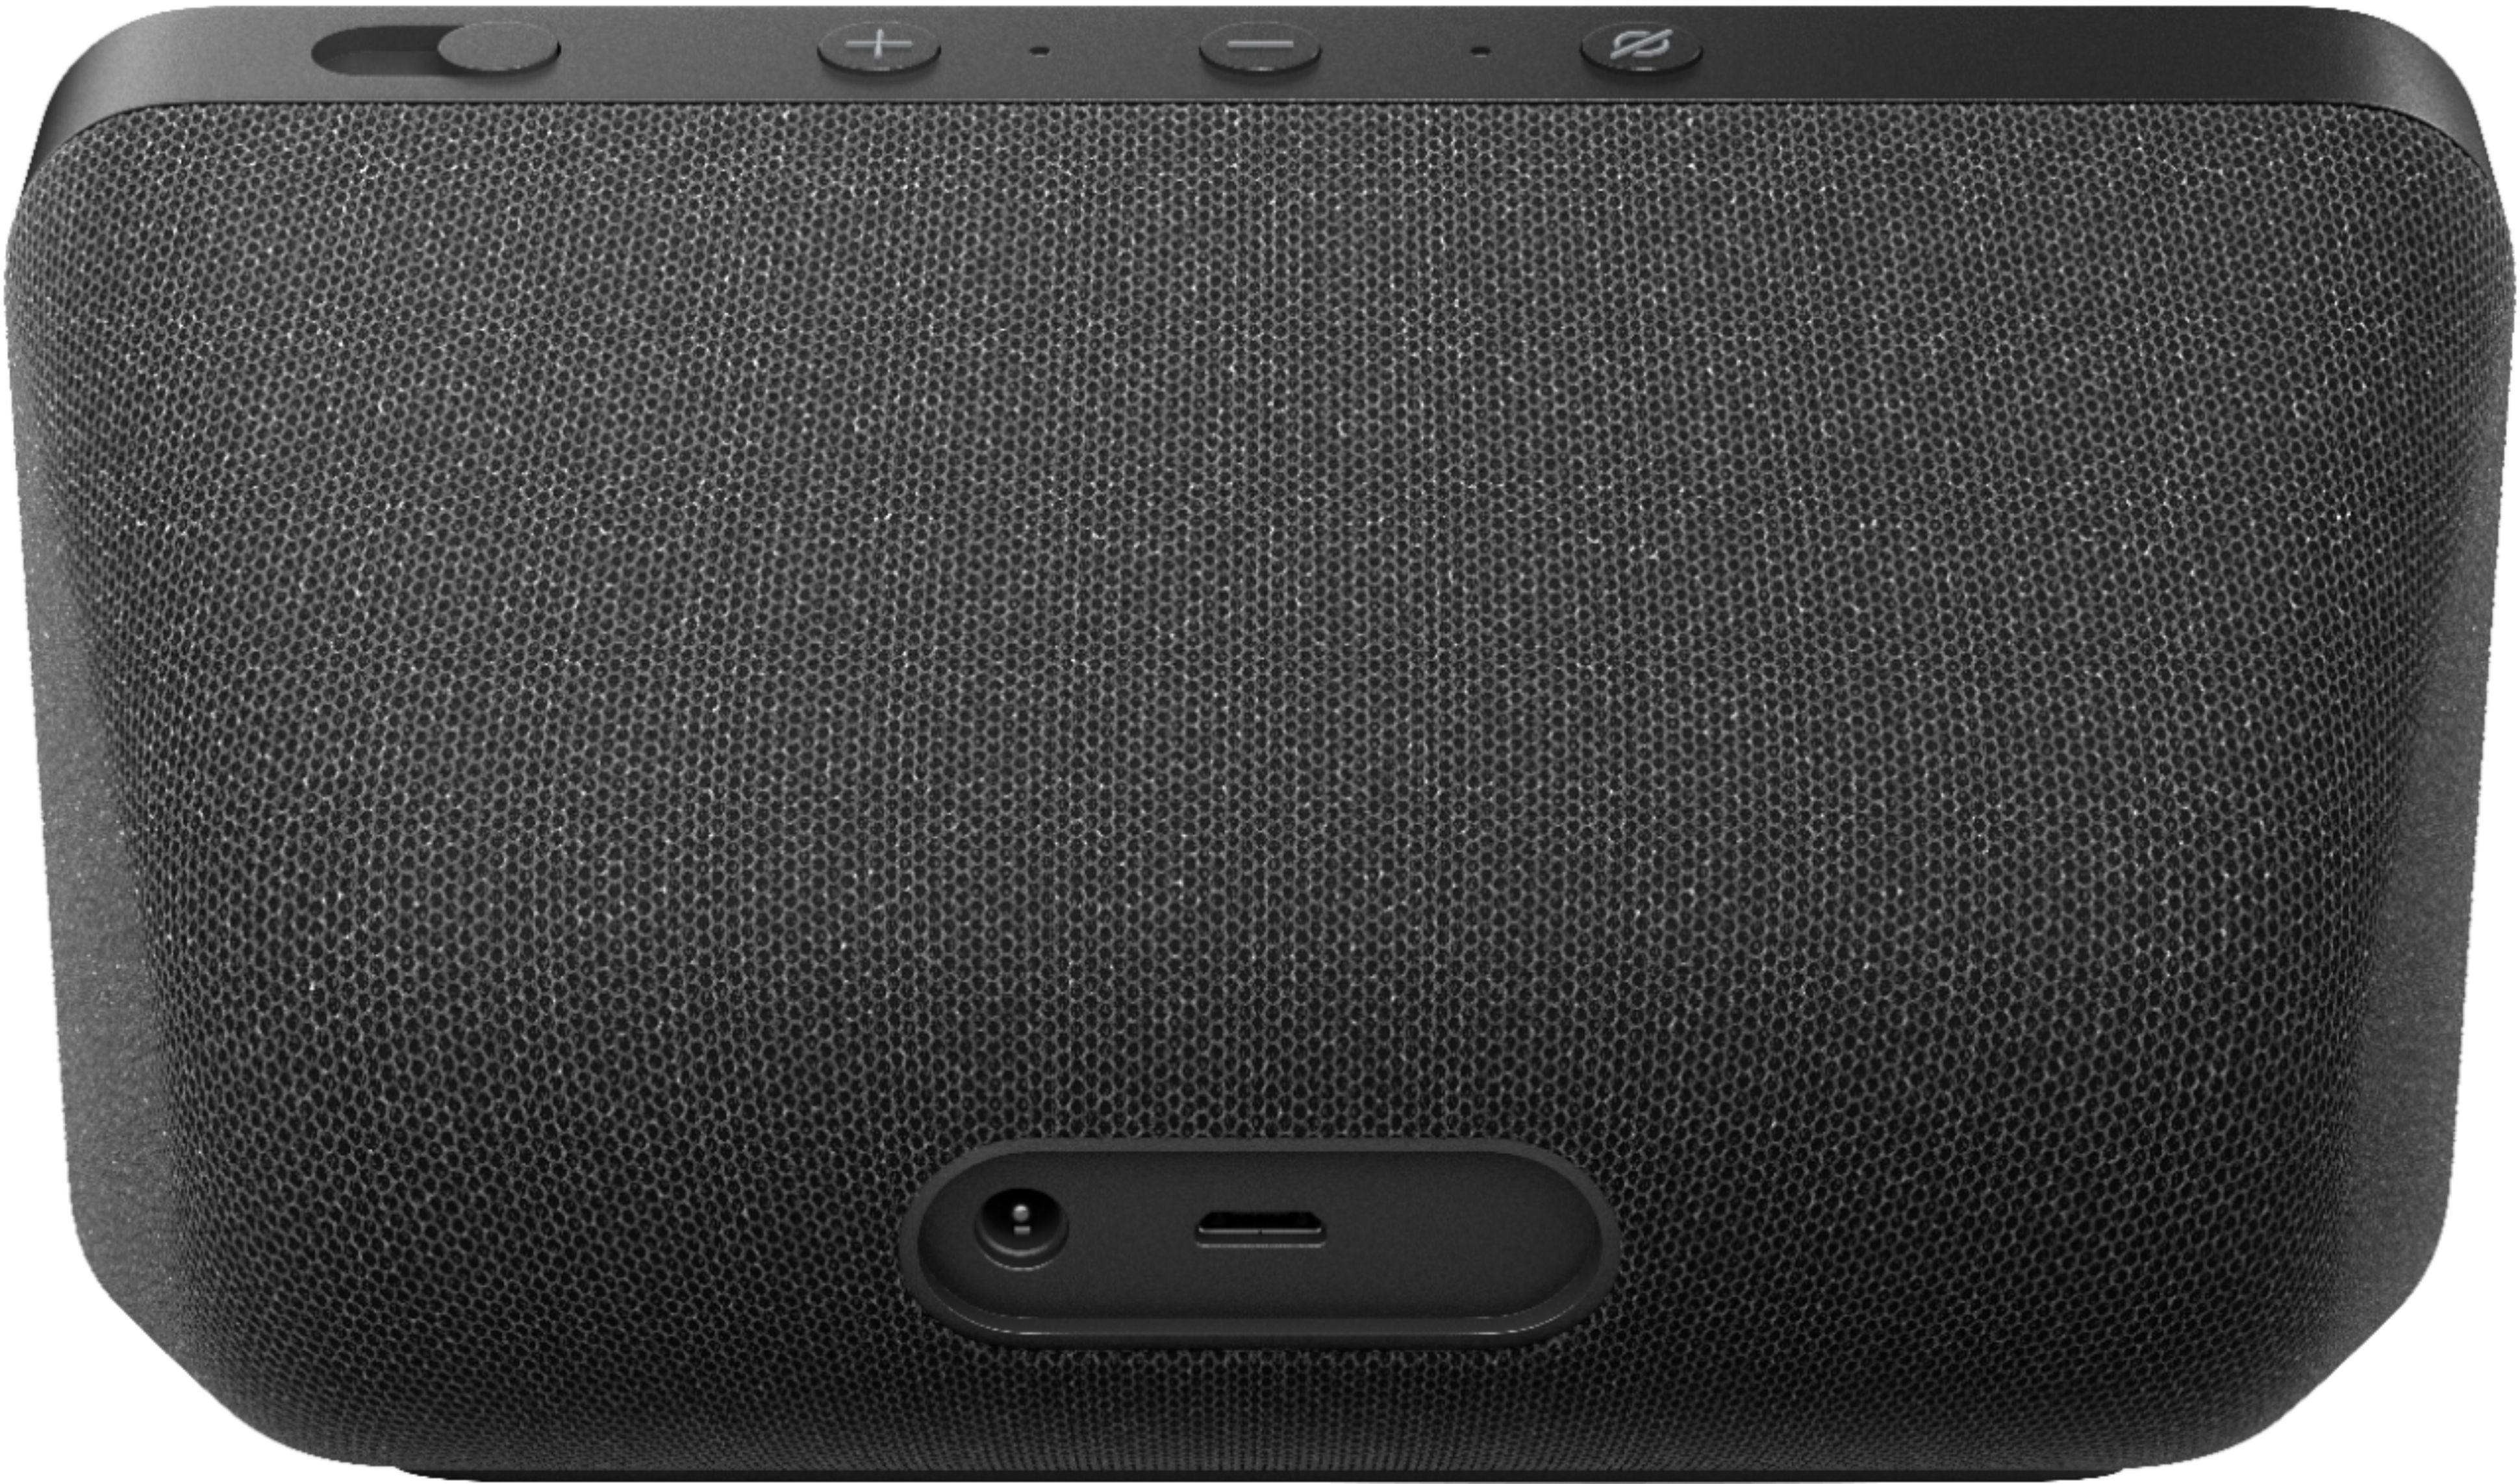 Buy  Echo Show 5 (2nd Gen) Smart Multimedia Speaker with Built-in  Camera, Black at Best Price on Reliance Digital